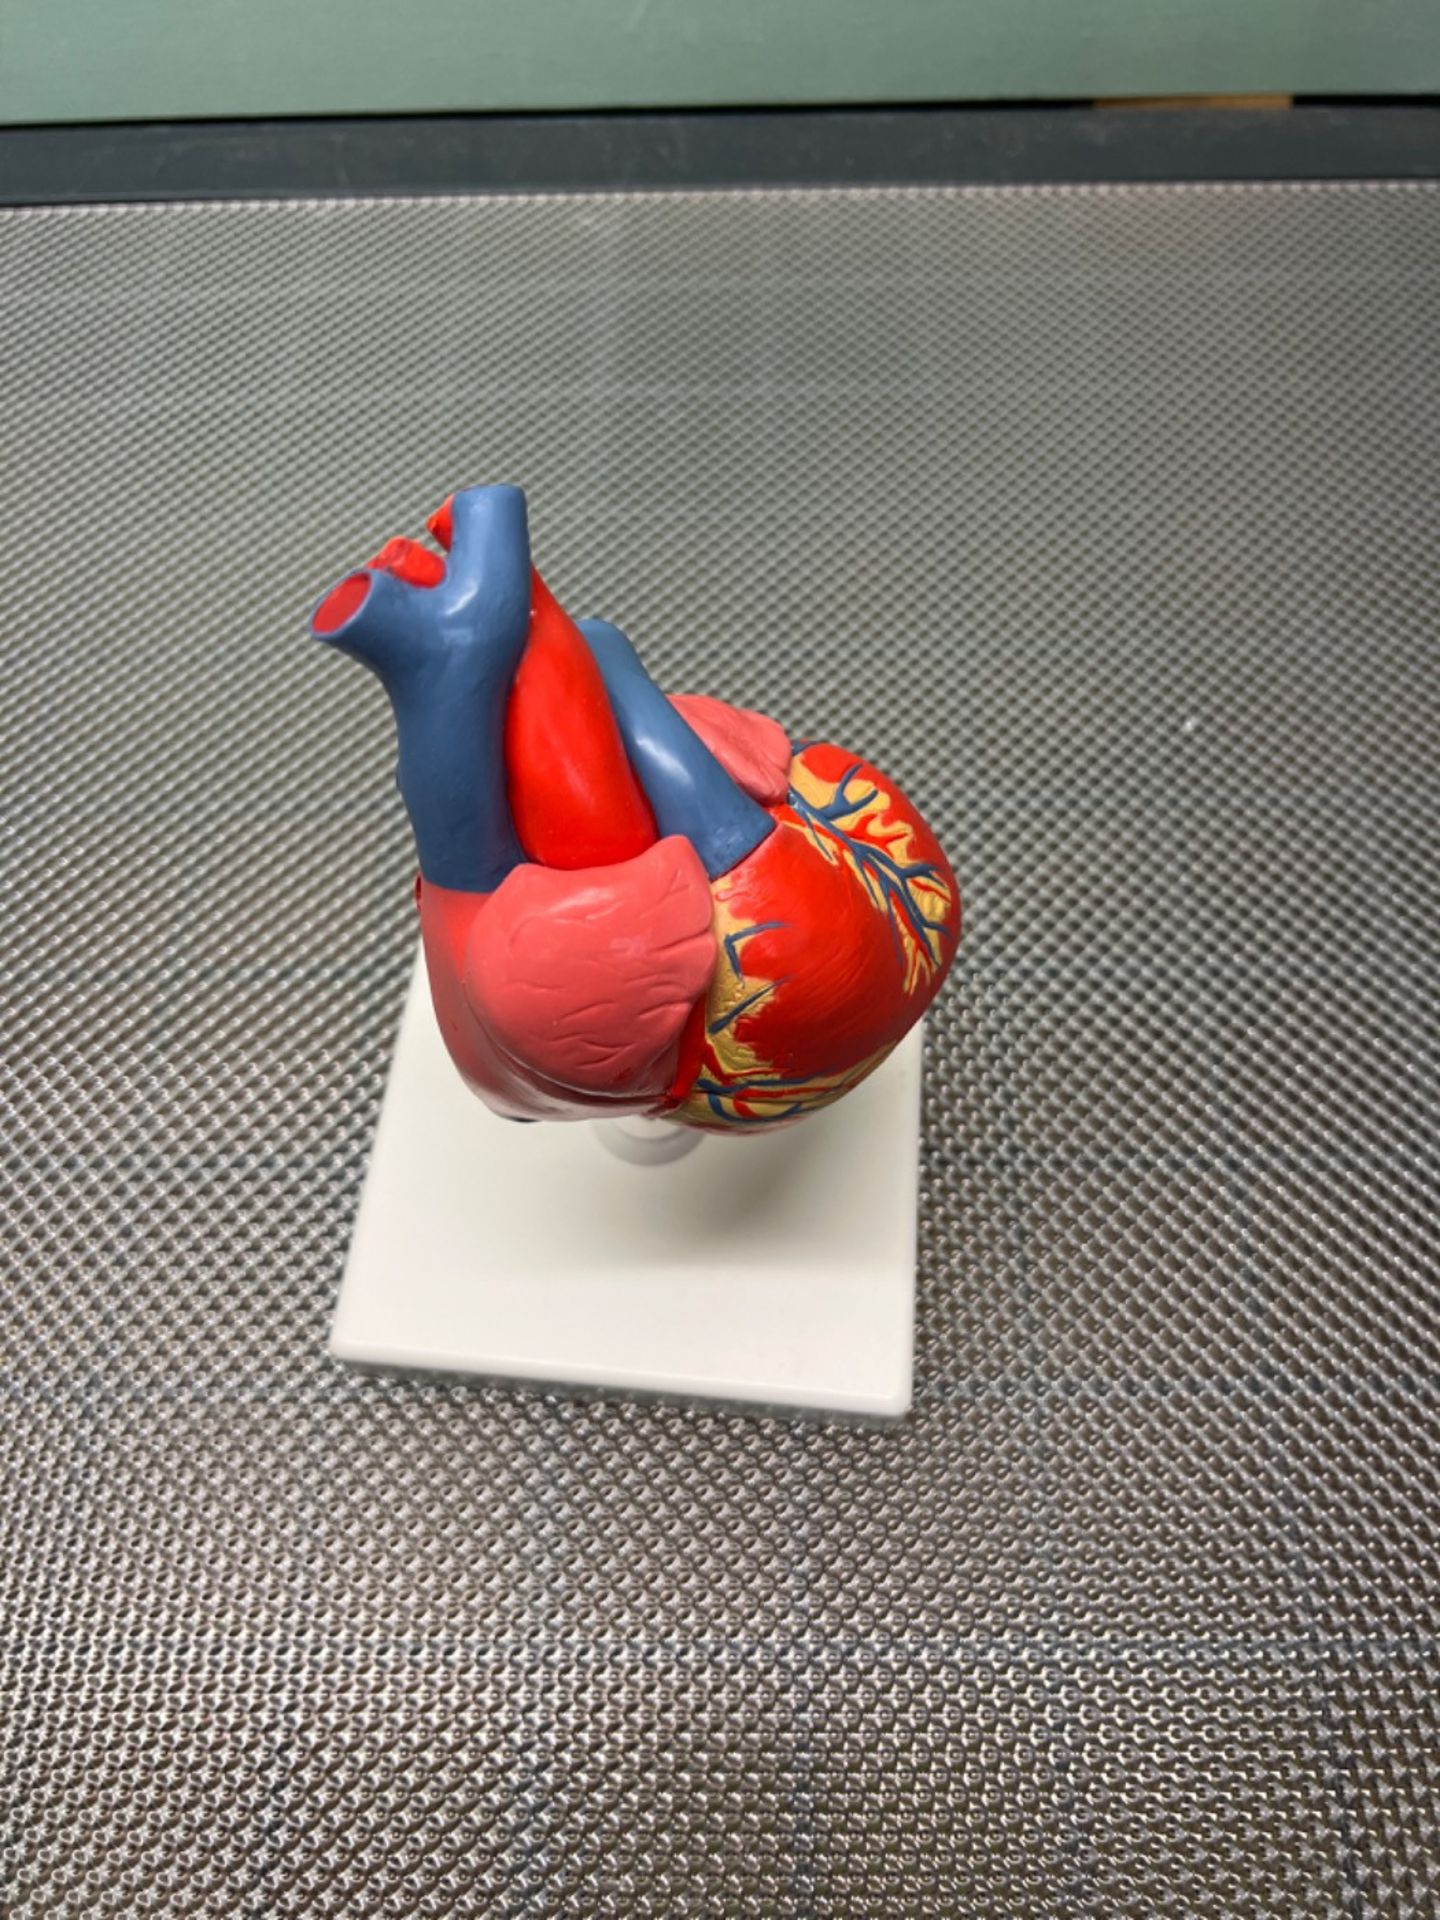 3B Scientific Human Anatomy - Classic Heart Model, 2 Part + free Anatomy App - 3B Smart Anatomy - Image 3 of 3